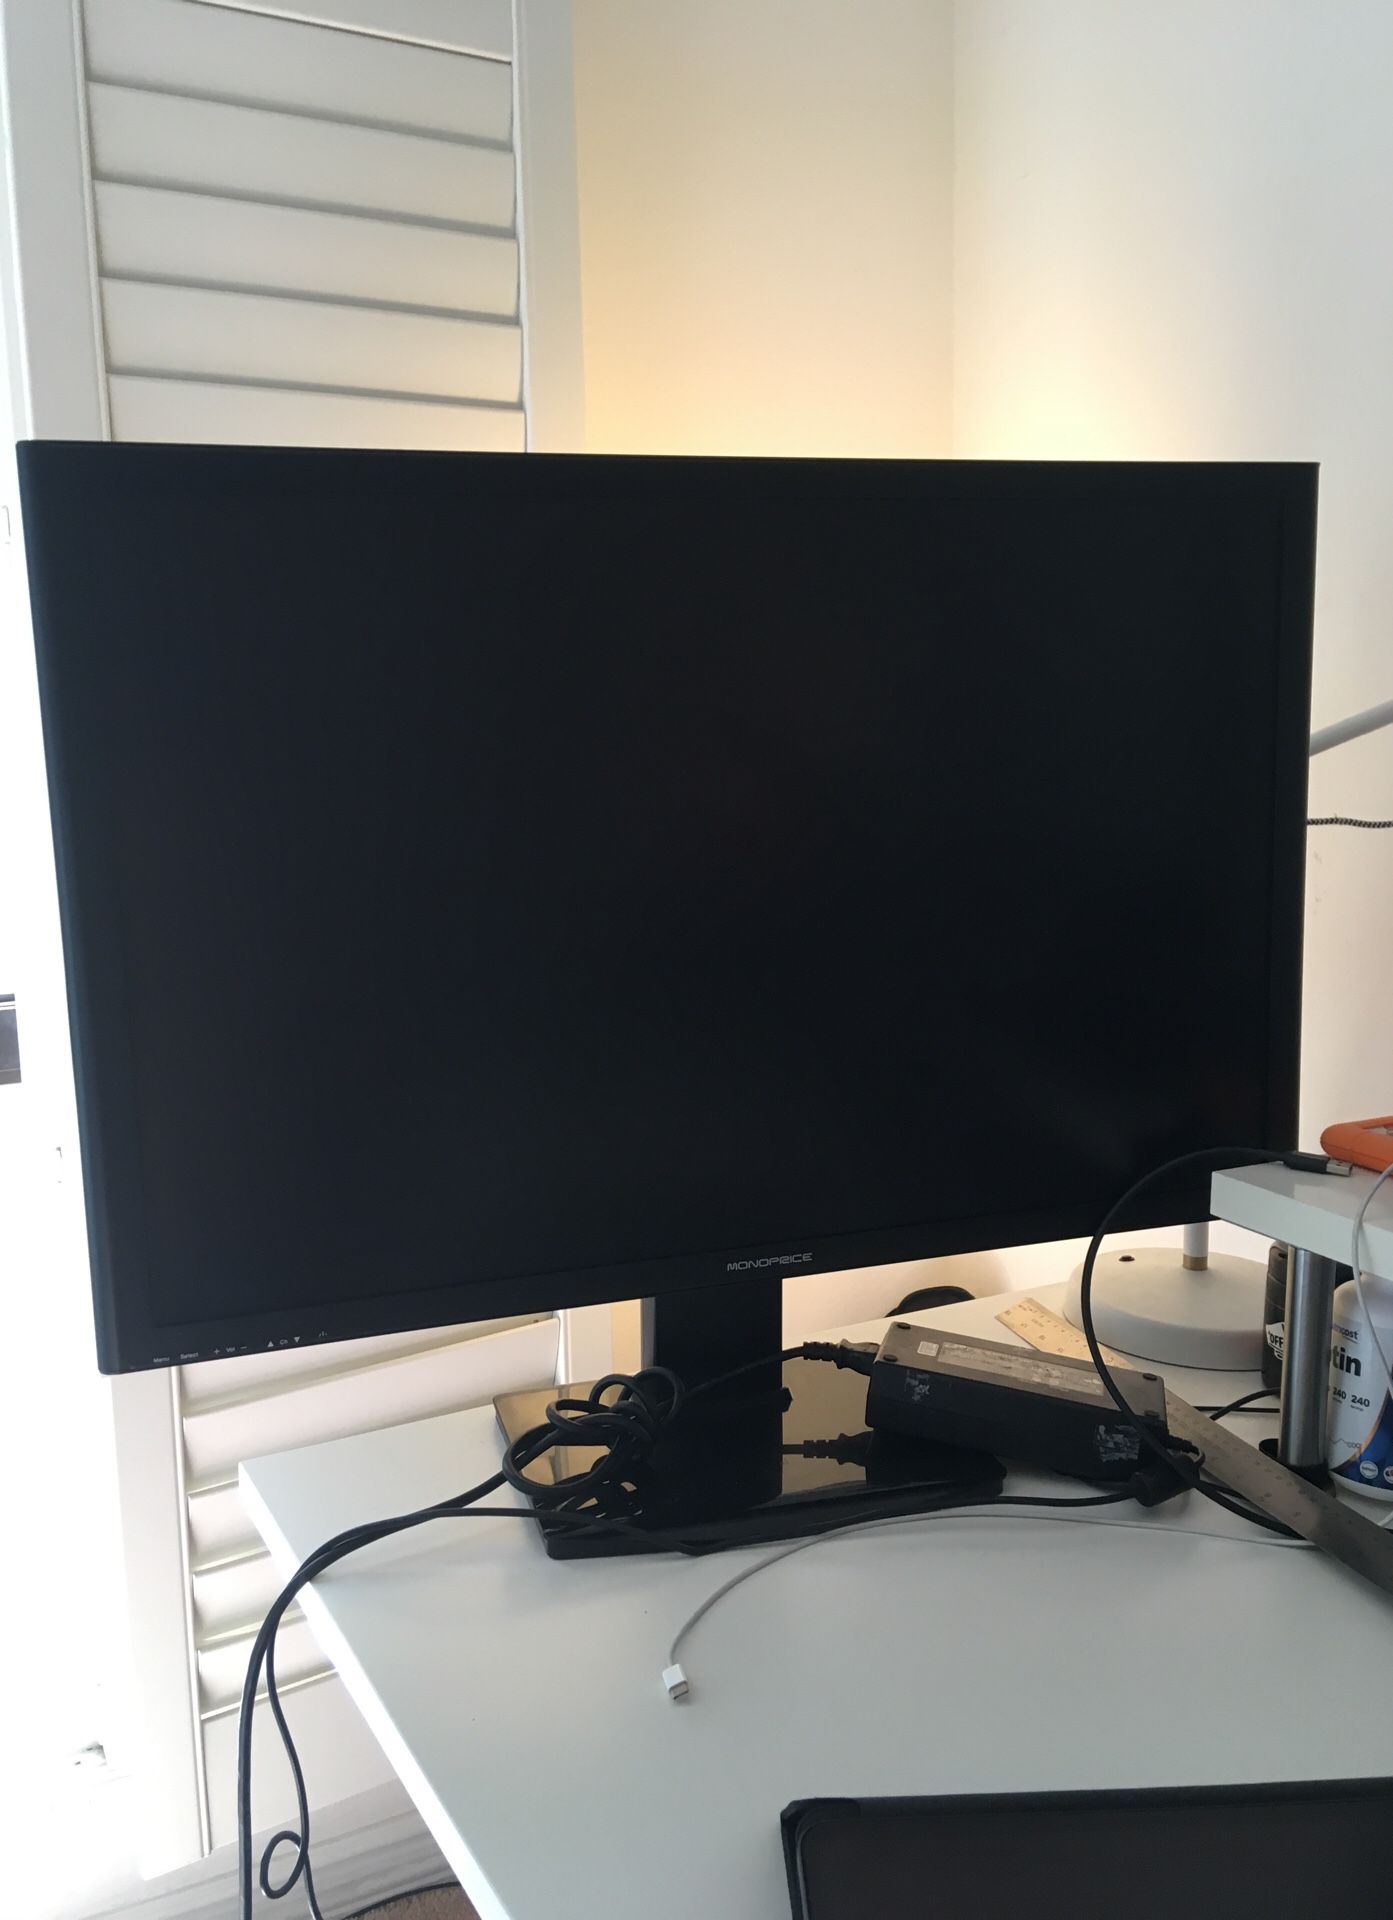 30” IPS LCD Monoprice Computer Monitor - Matte screen 2560x1600 30hz